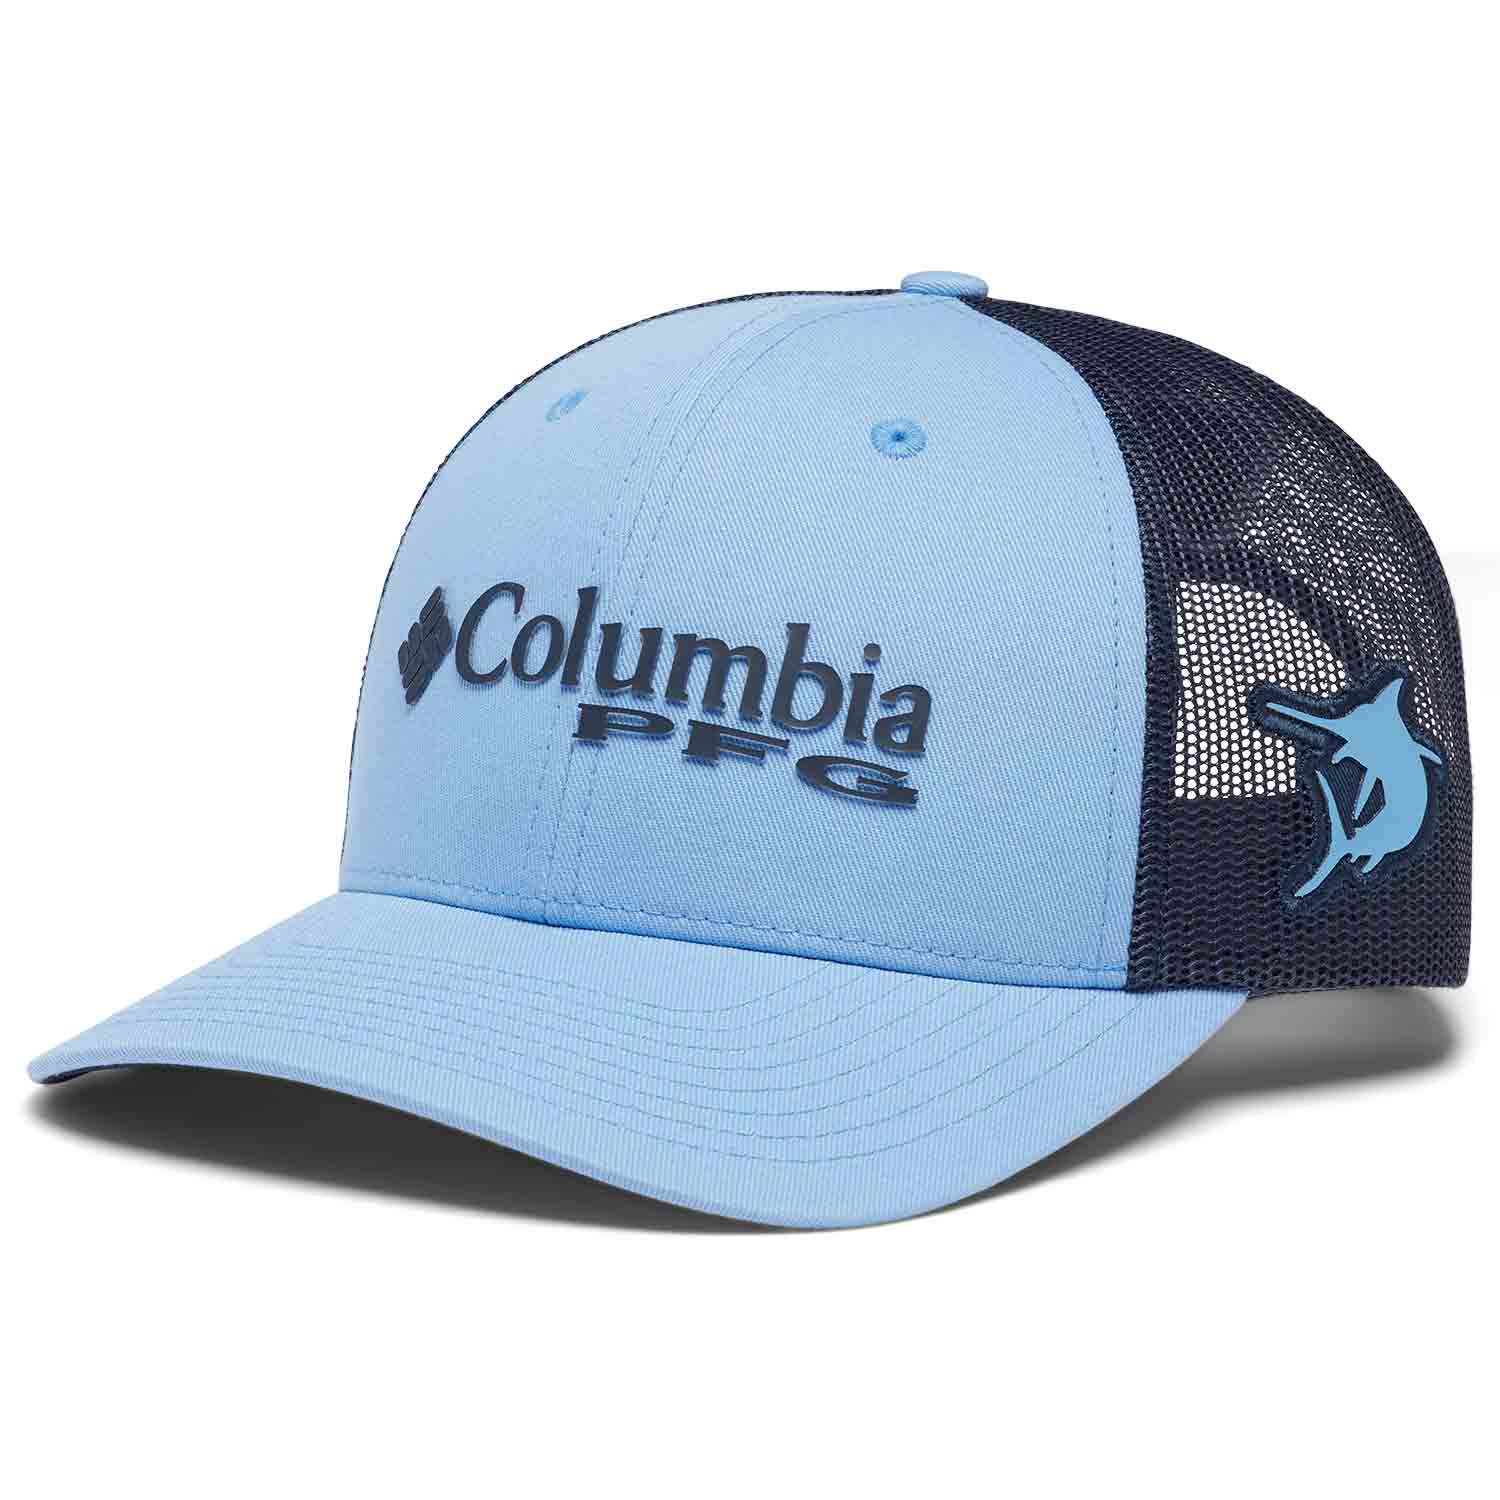 Columbia Unisex-Adult Mesh Ballcap L/XL